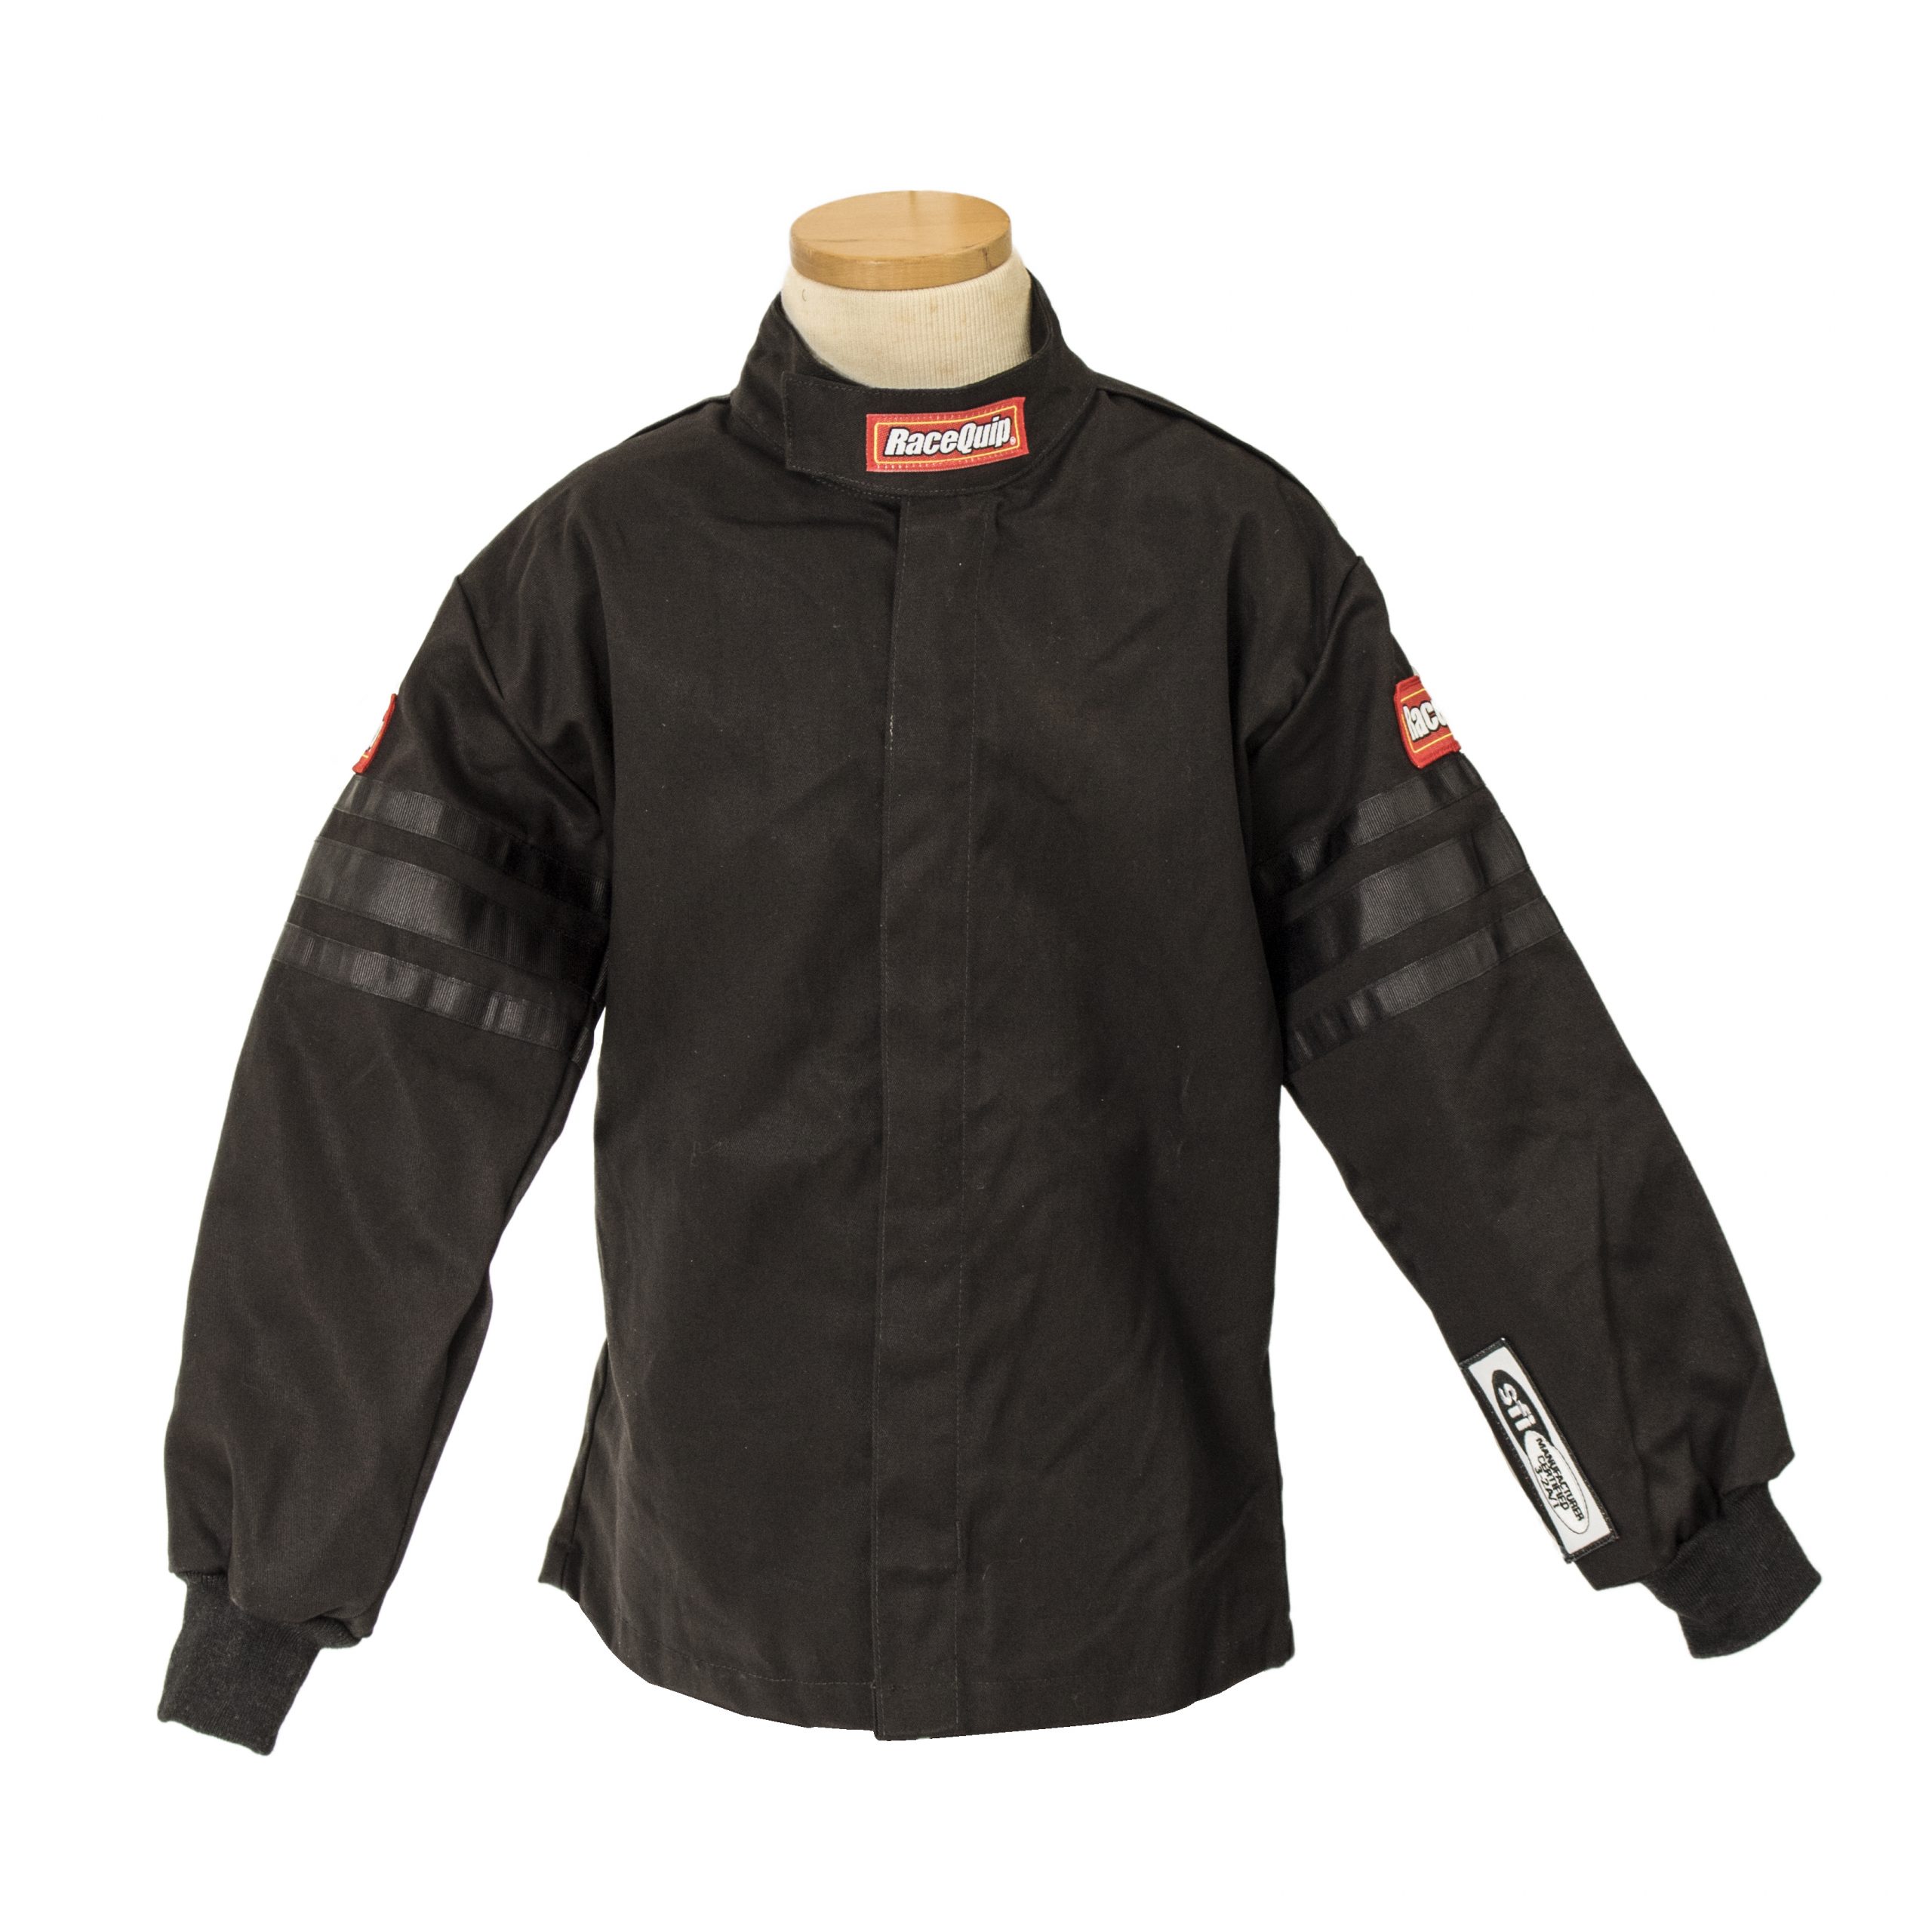 Racerdirect Racing Jacket & Pants SFI 3.2A/5 Double Layer Black Size Adult XL 